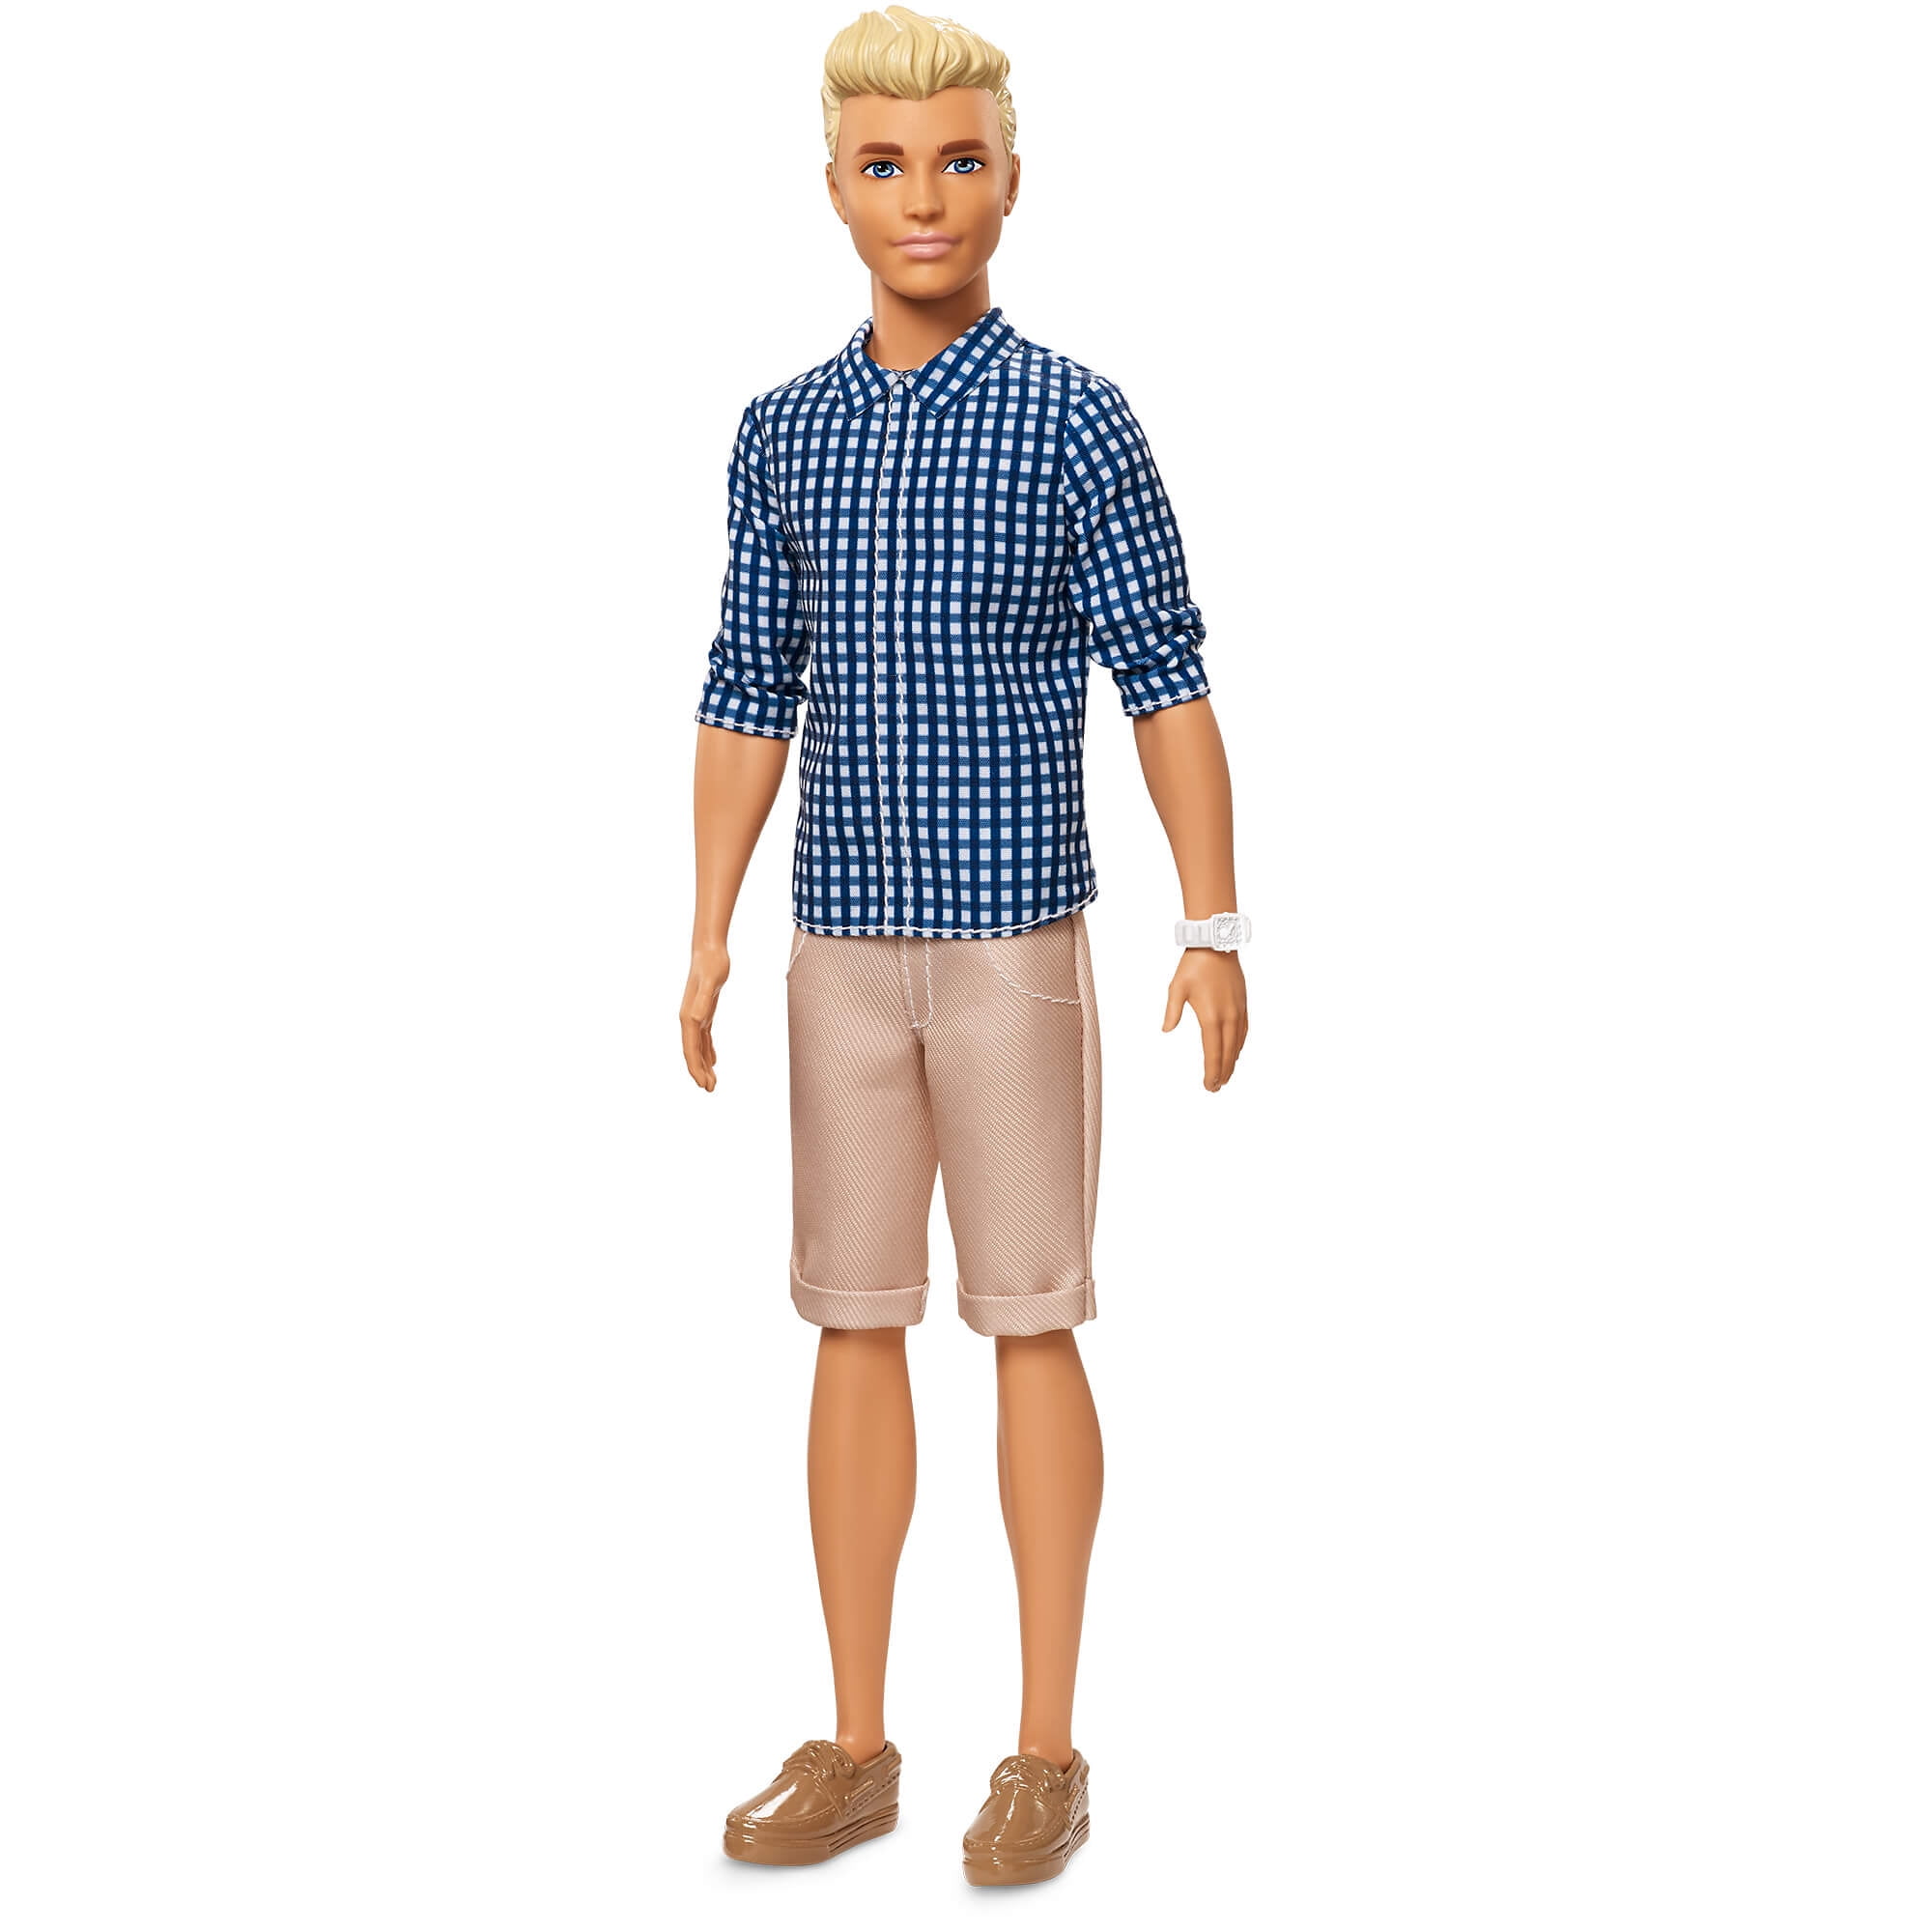 Barbie Ken Fashionistas Original Doll 7 Preppy Check Walmart 